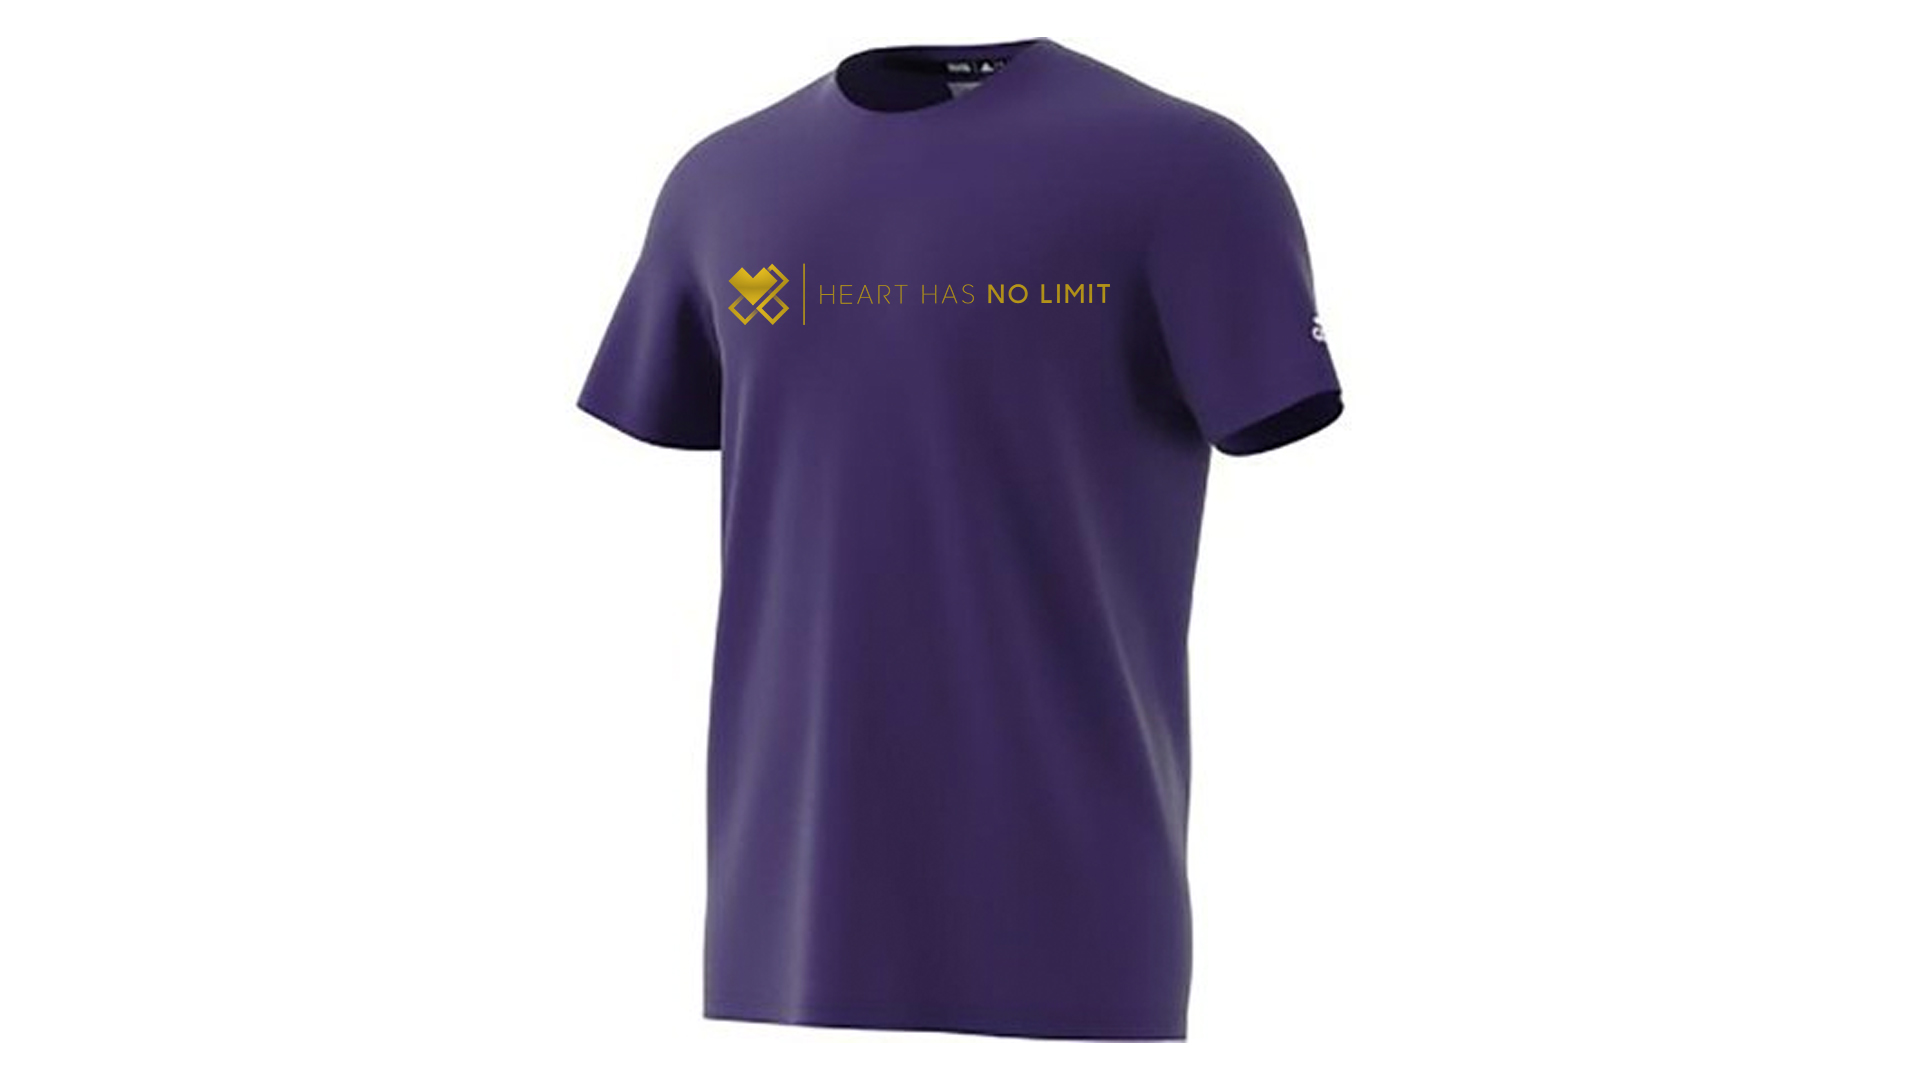 adidas - Purple Clima Tech Tee - Gold Writing Heart Has No Limit